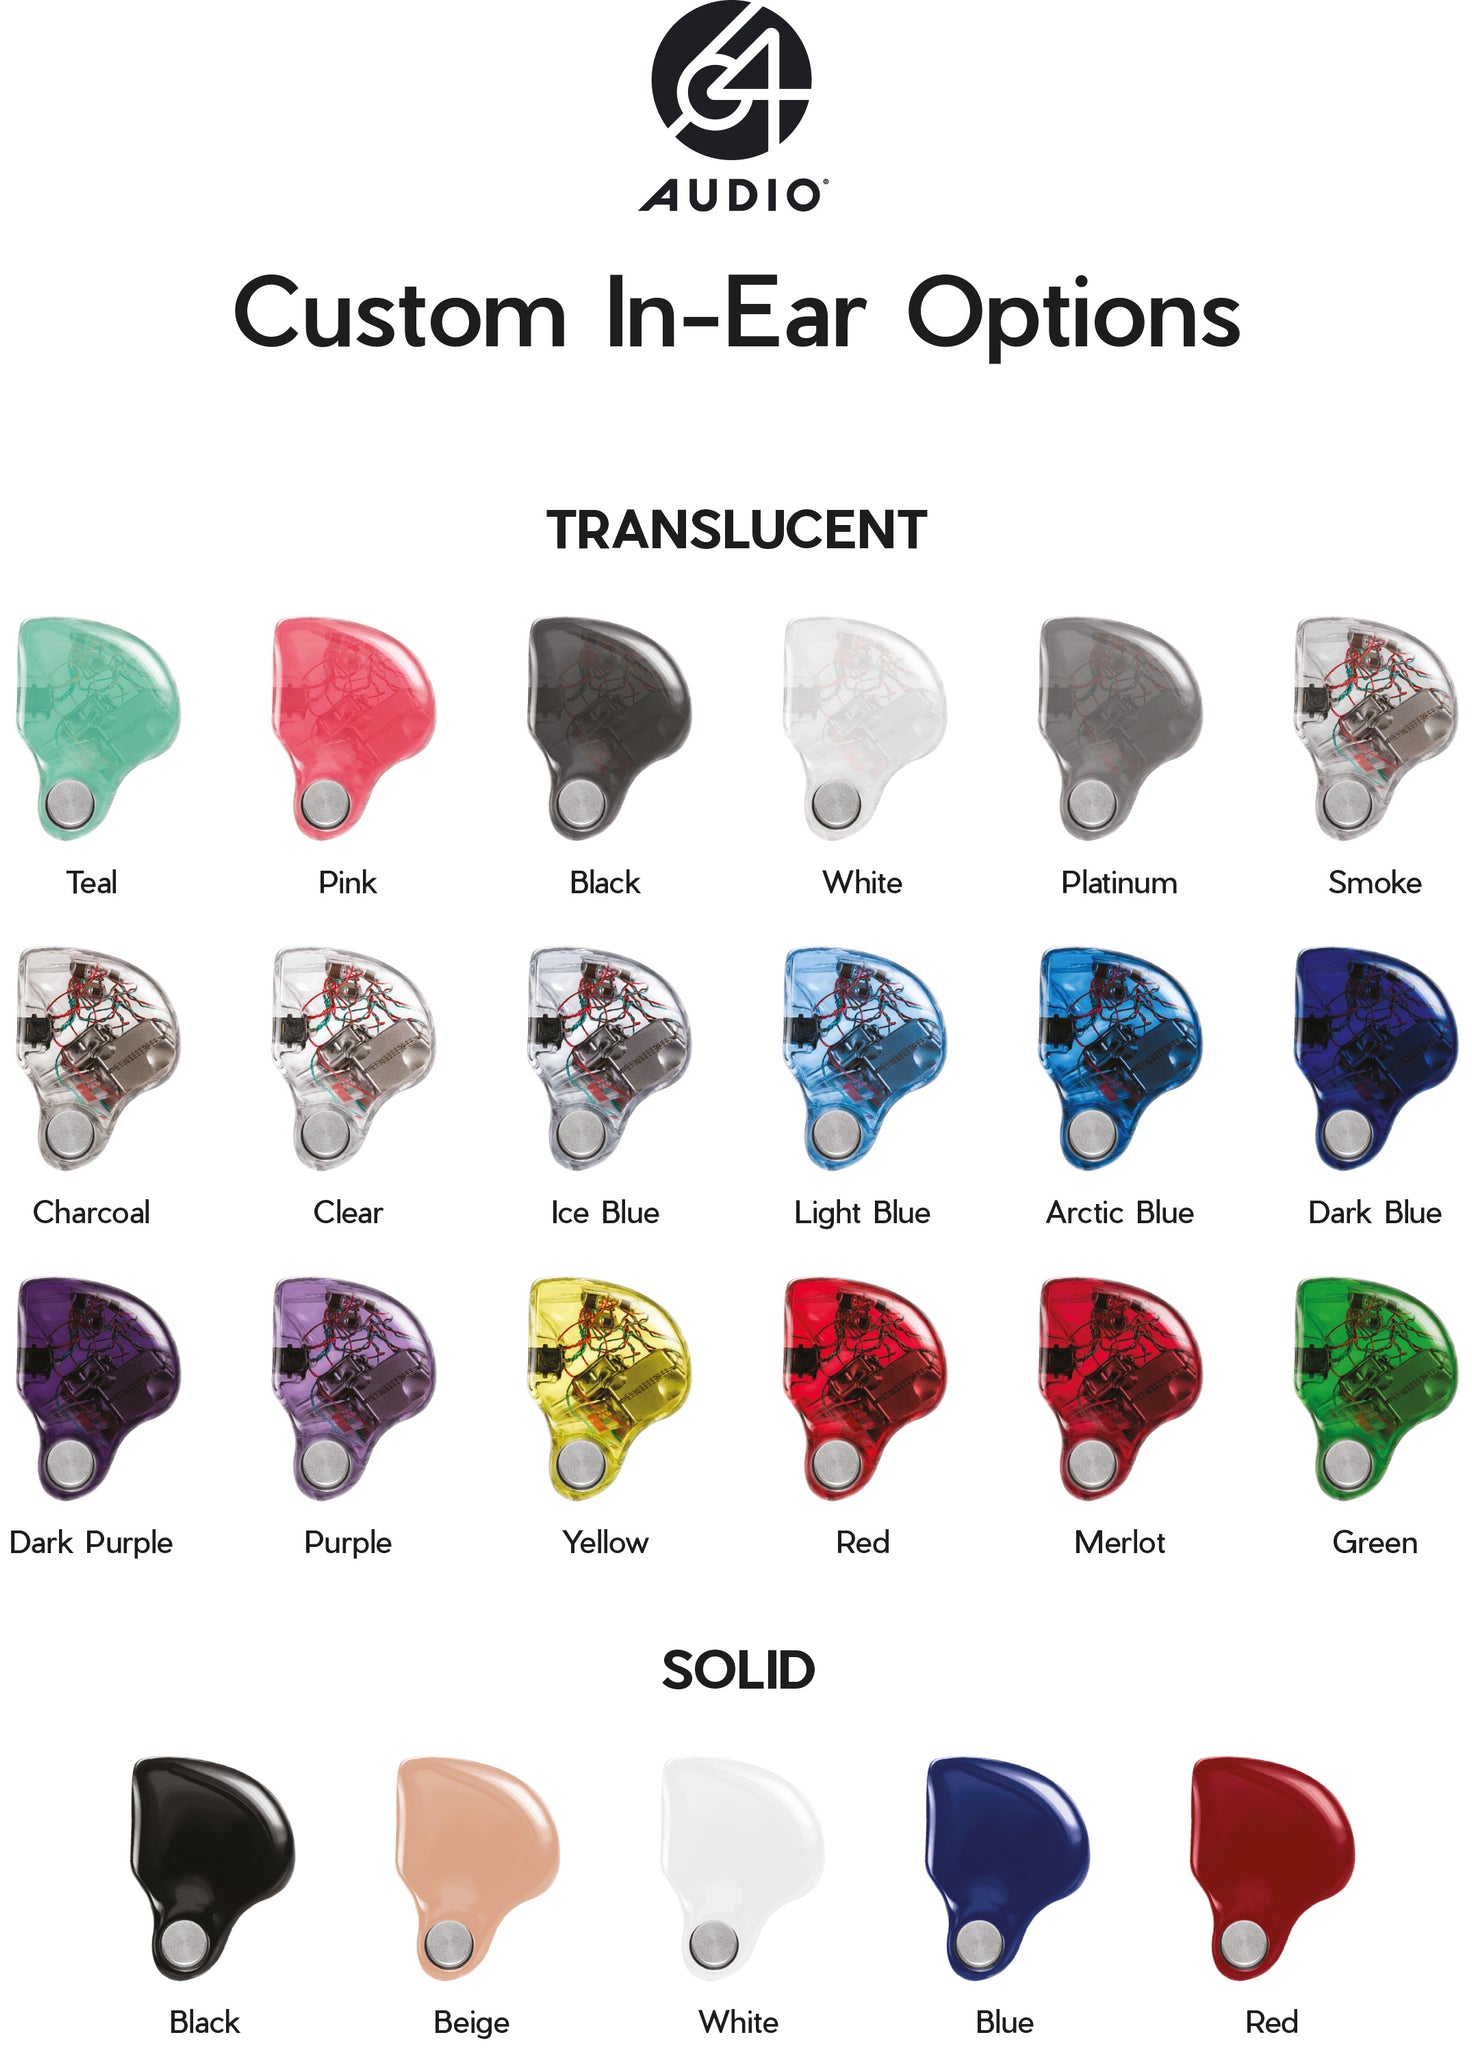 64 Audio Custom In-Ear Options